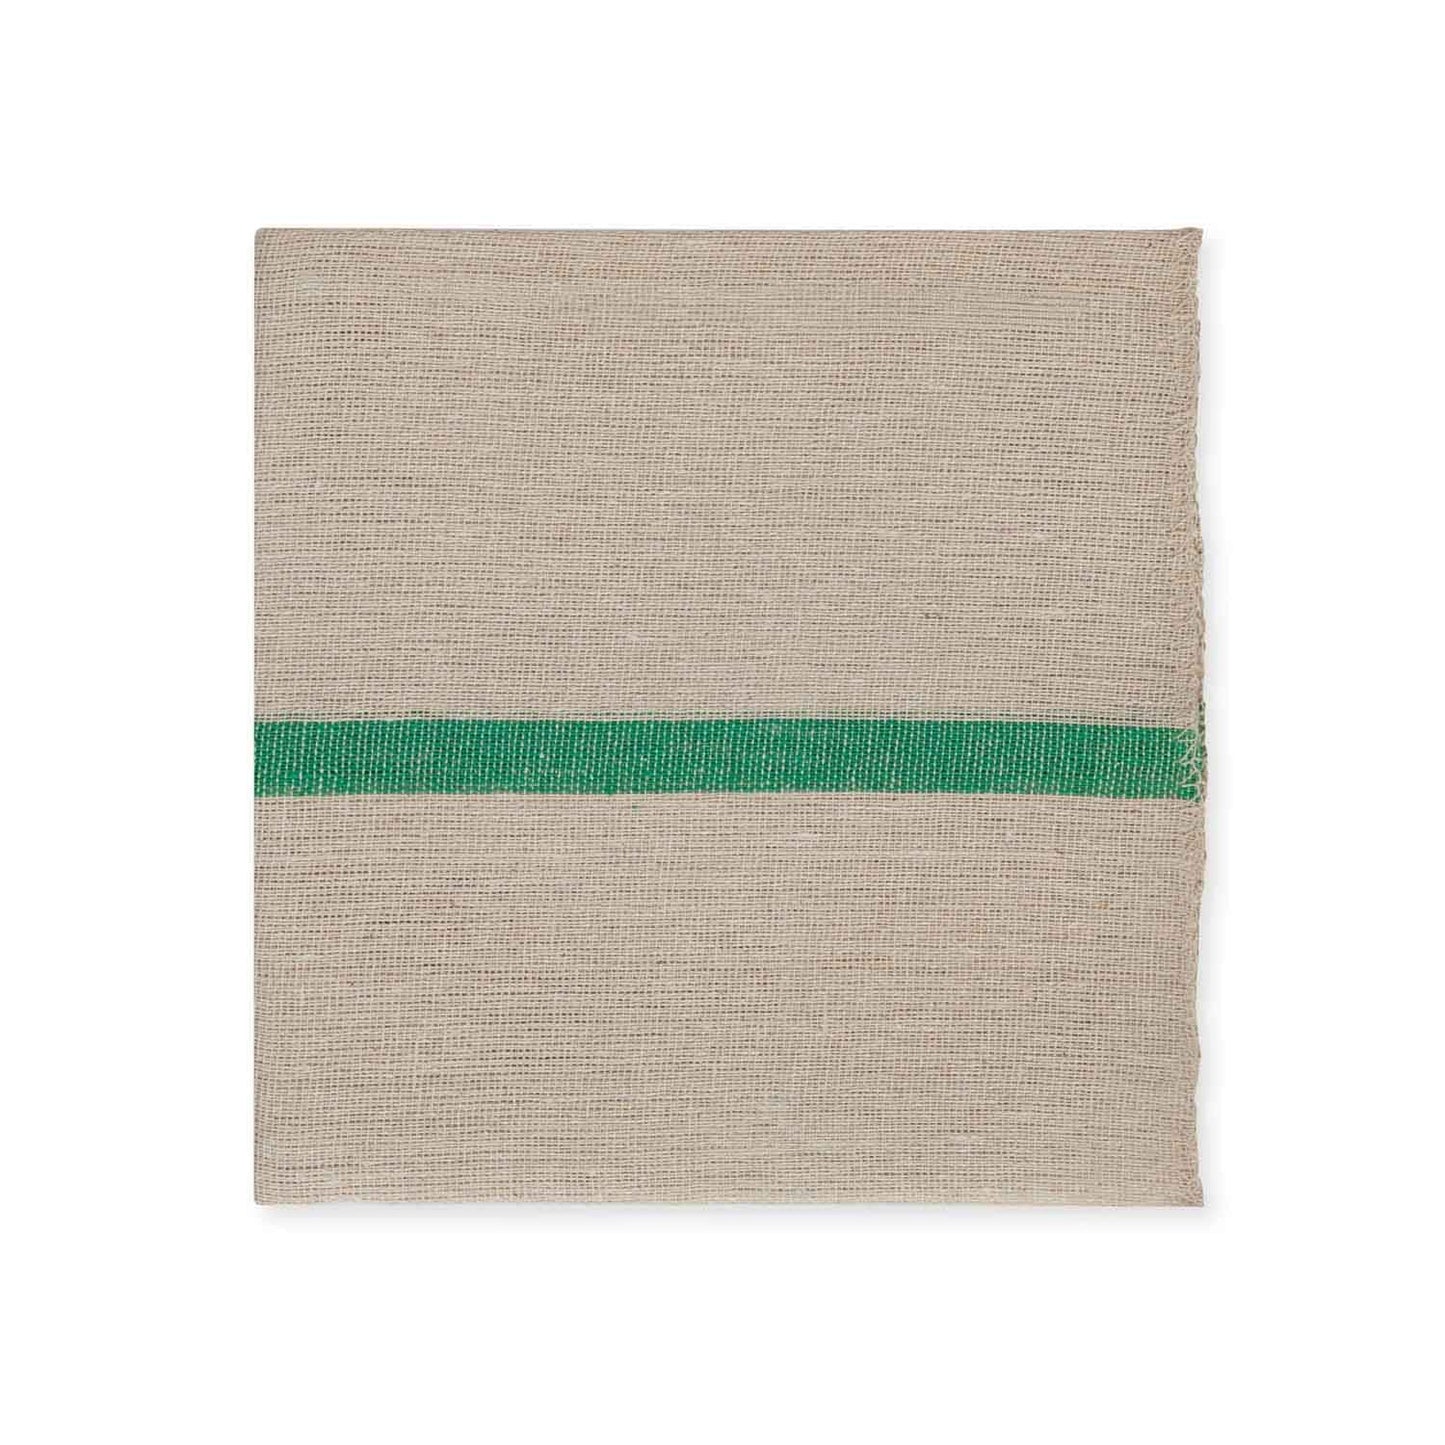 American Dawn | 26X36 Inch Osnaburg White With Green Center Stripe Dish Towel 